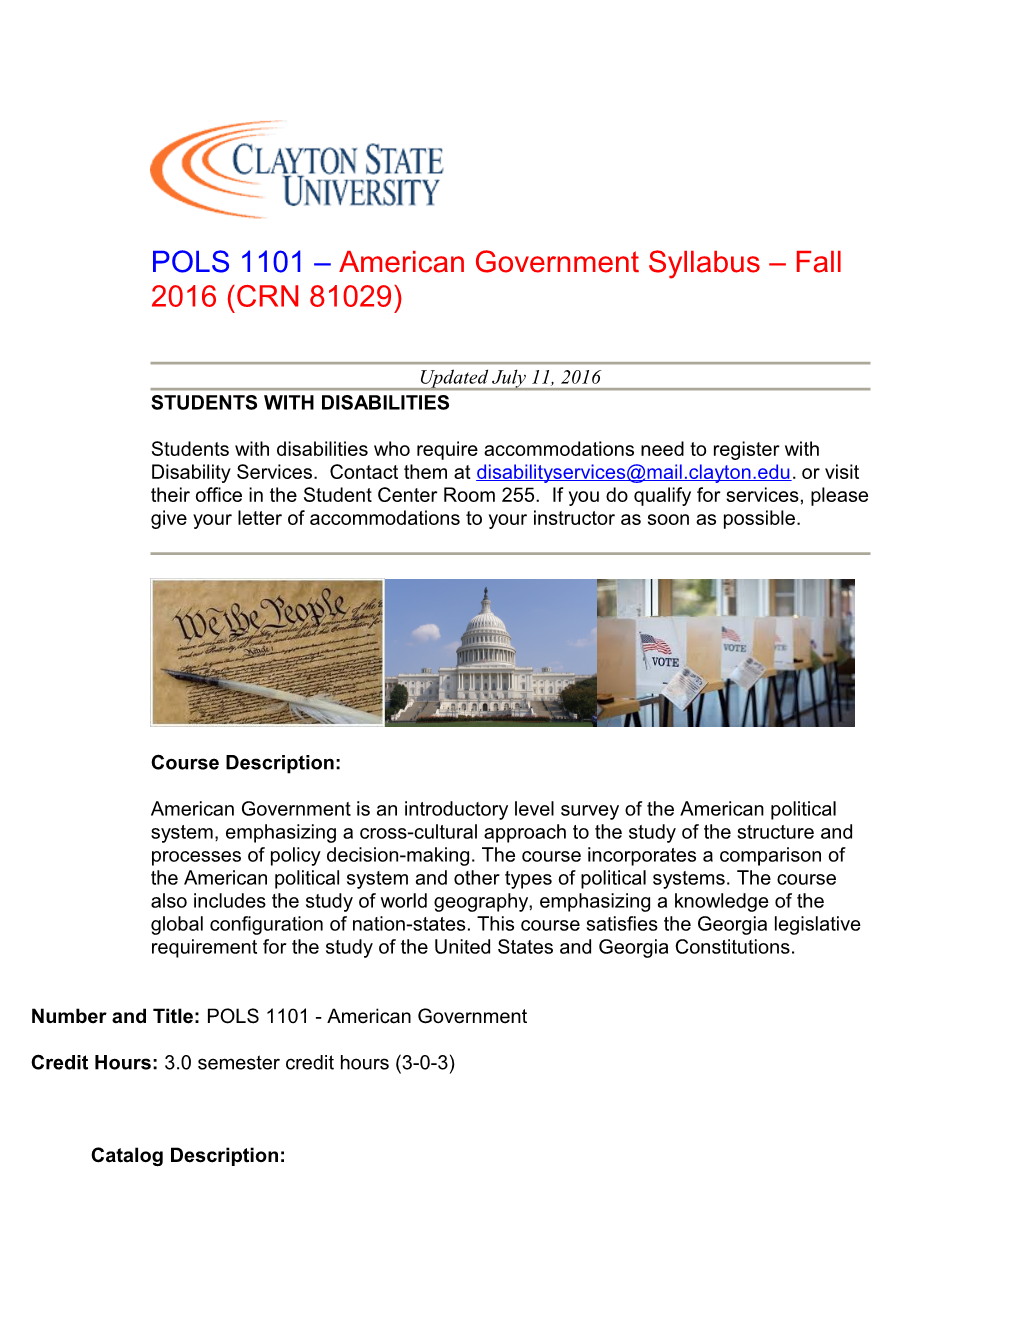 POLS1101 American Government Syllabus Fall 2016(CRN 81029)